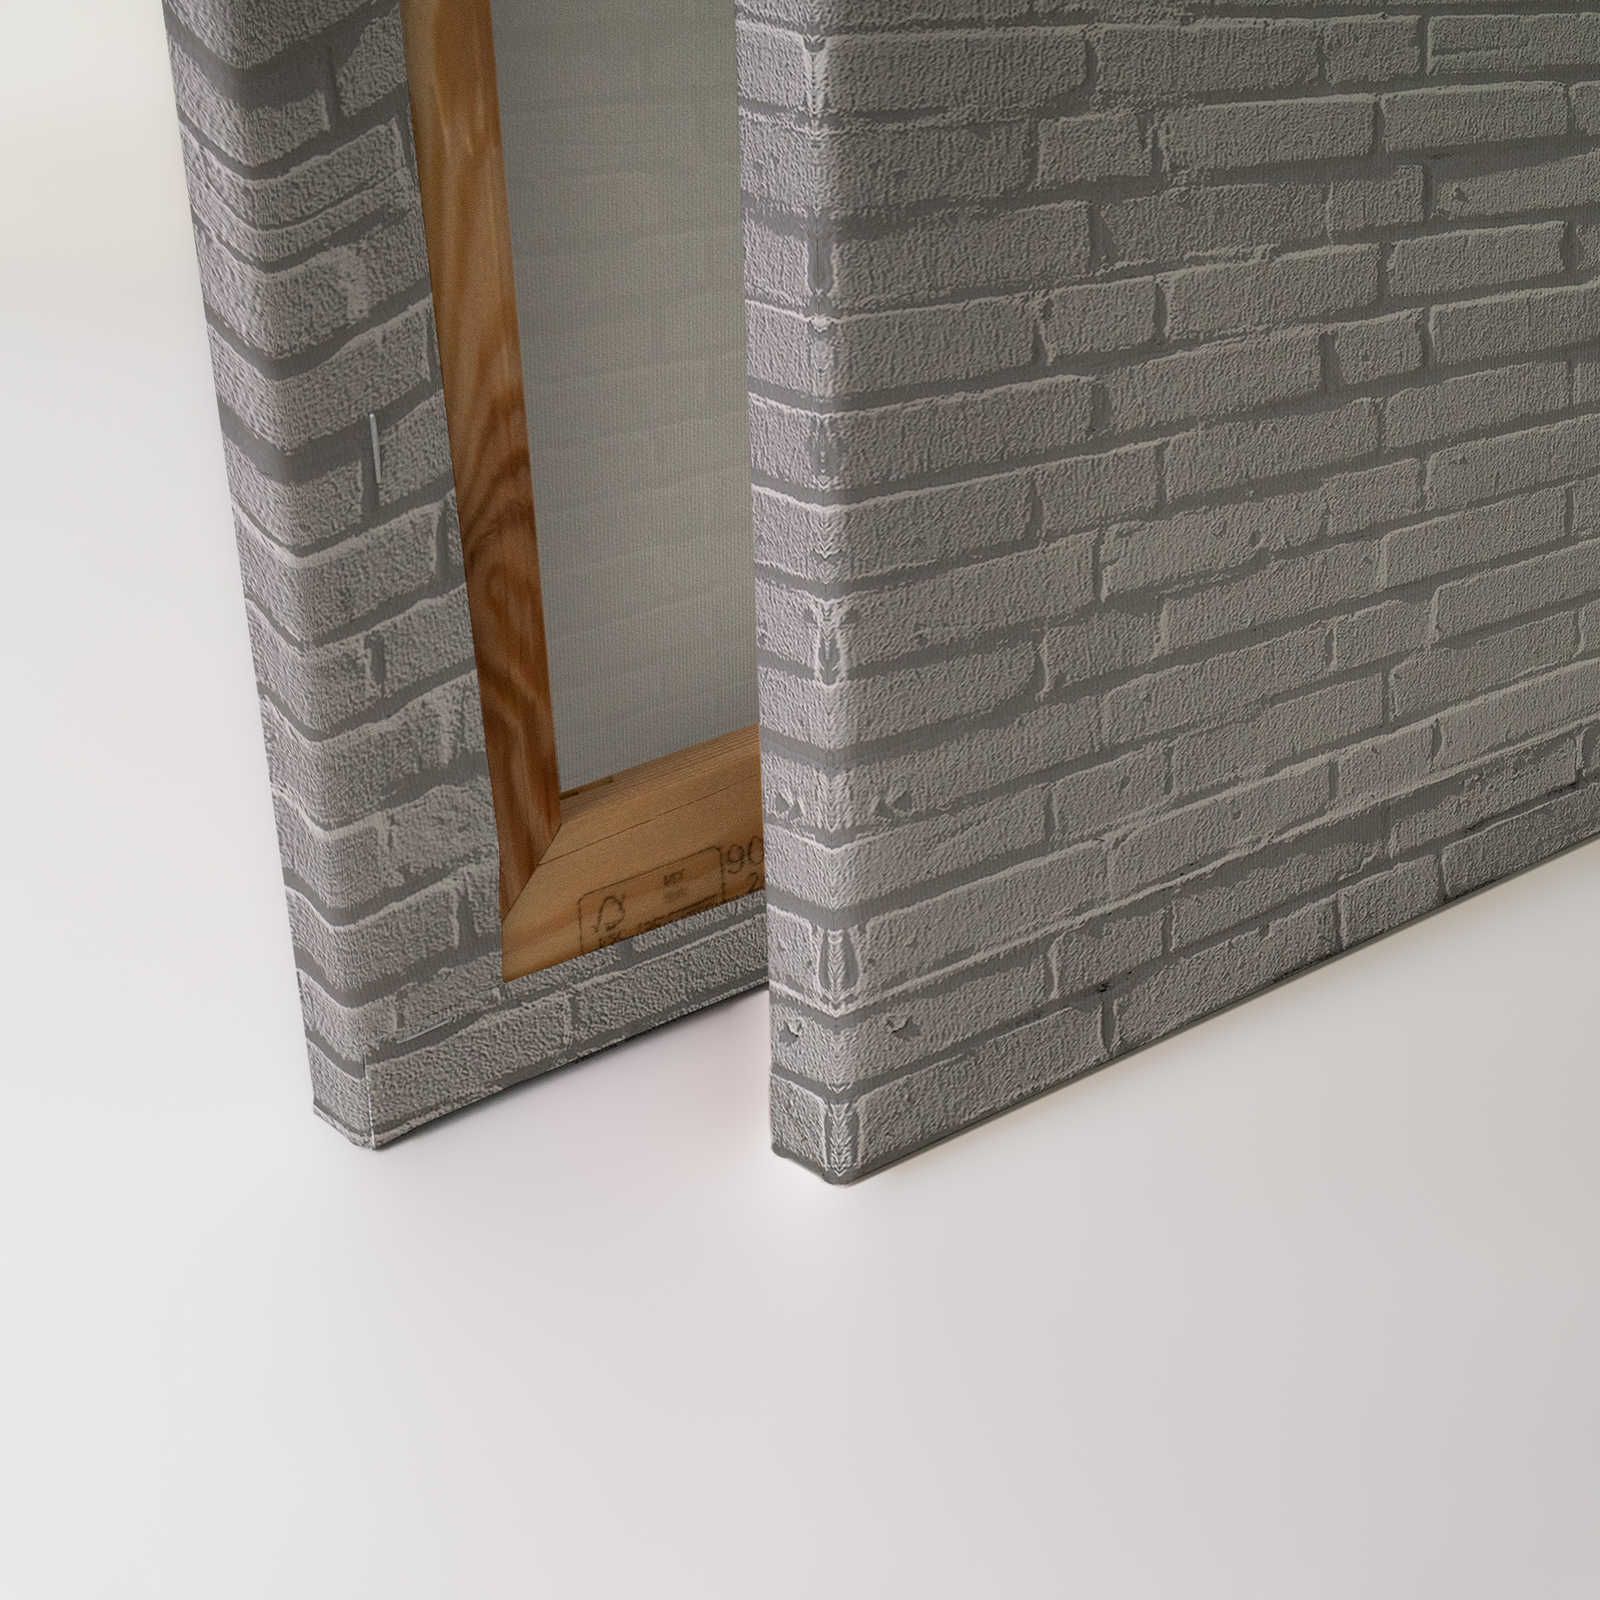             Leinwandbild graue Ziegelmauer in 3D Look – 0,90 m x 0,60 m
        